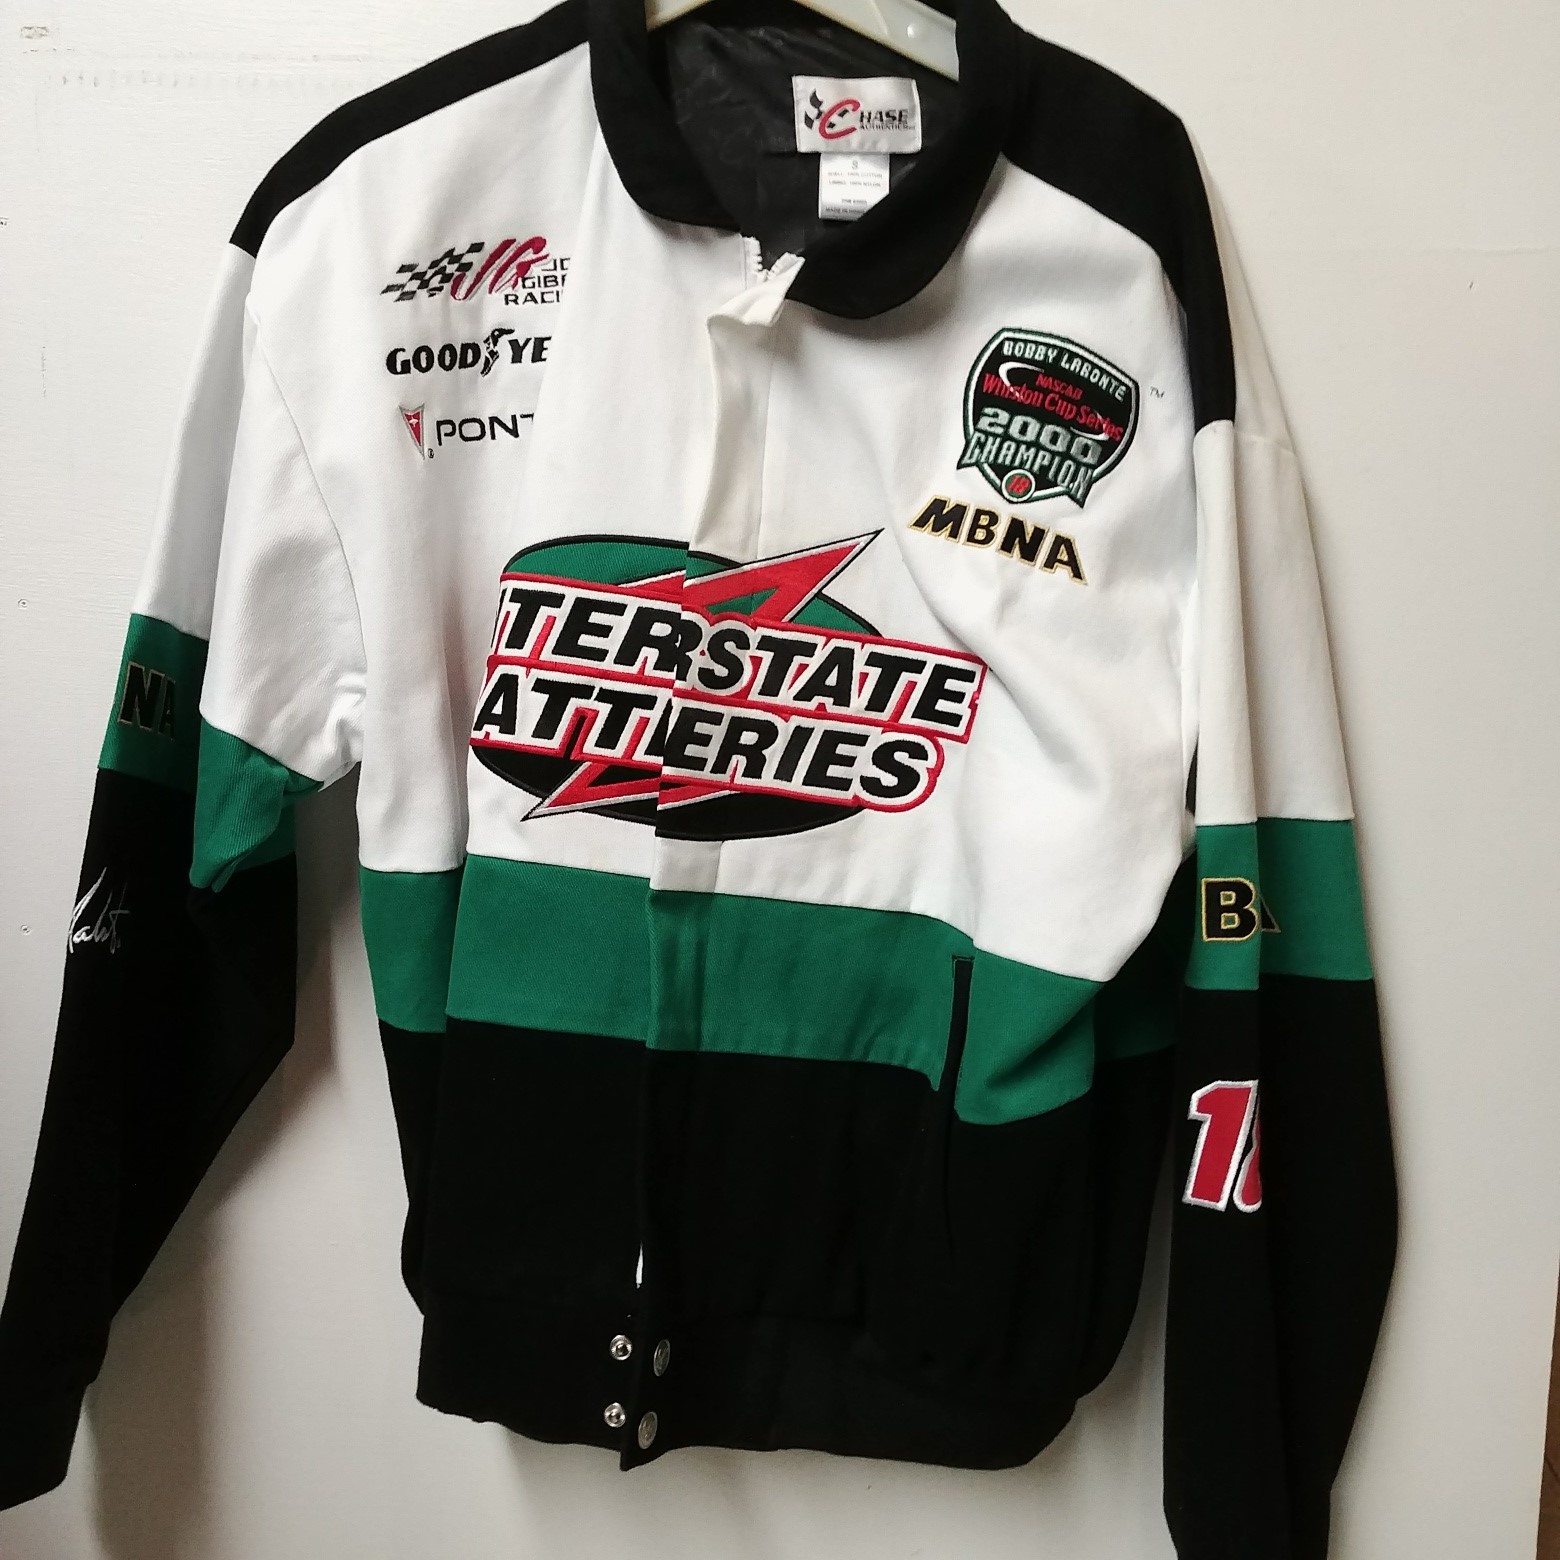 2000 Bobby Labonte Interstate Batteries "Winston Cup Champion" uniform jacket